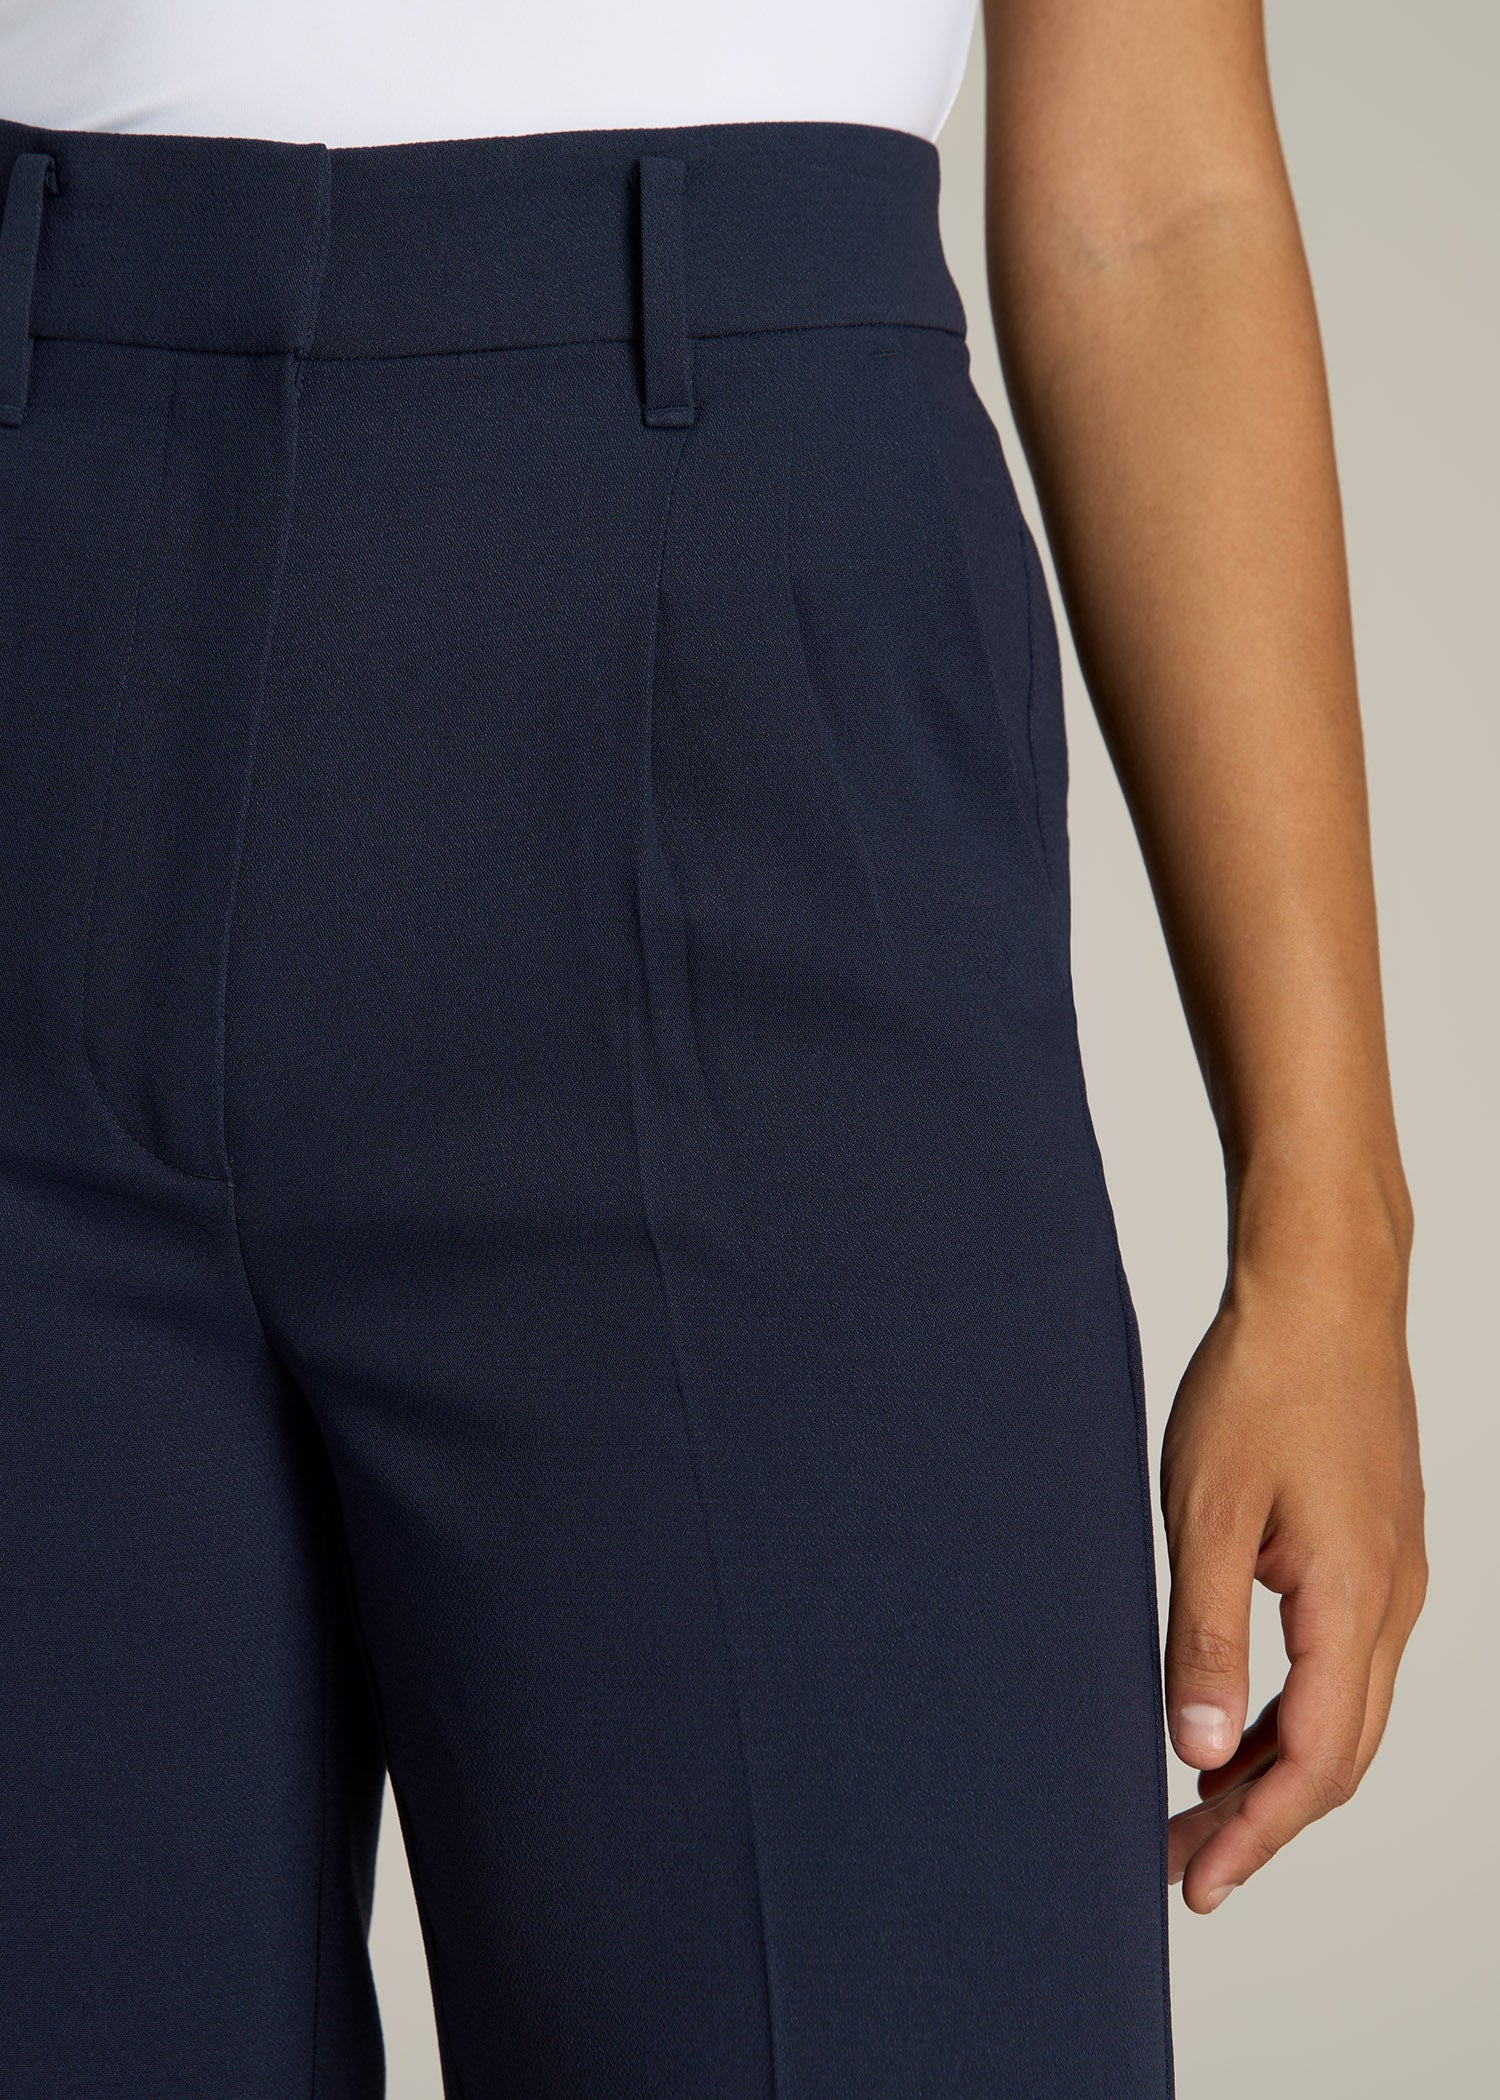 High-waist Dress Pants - Navy blue - Ladies